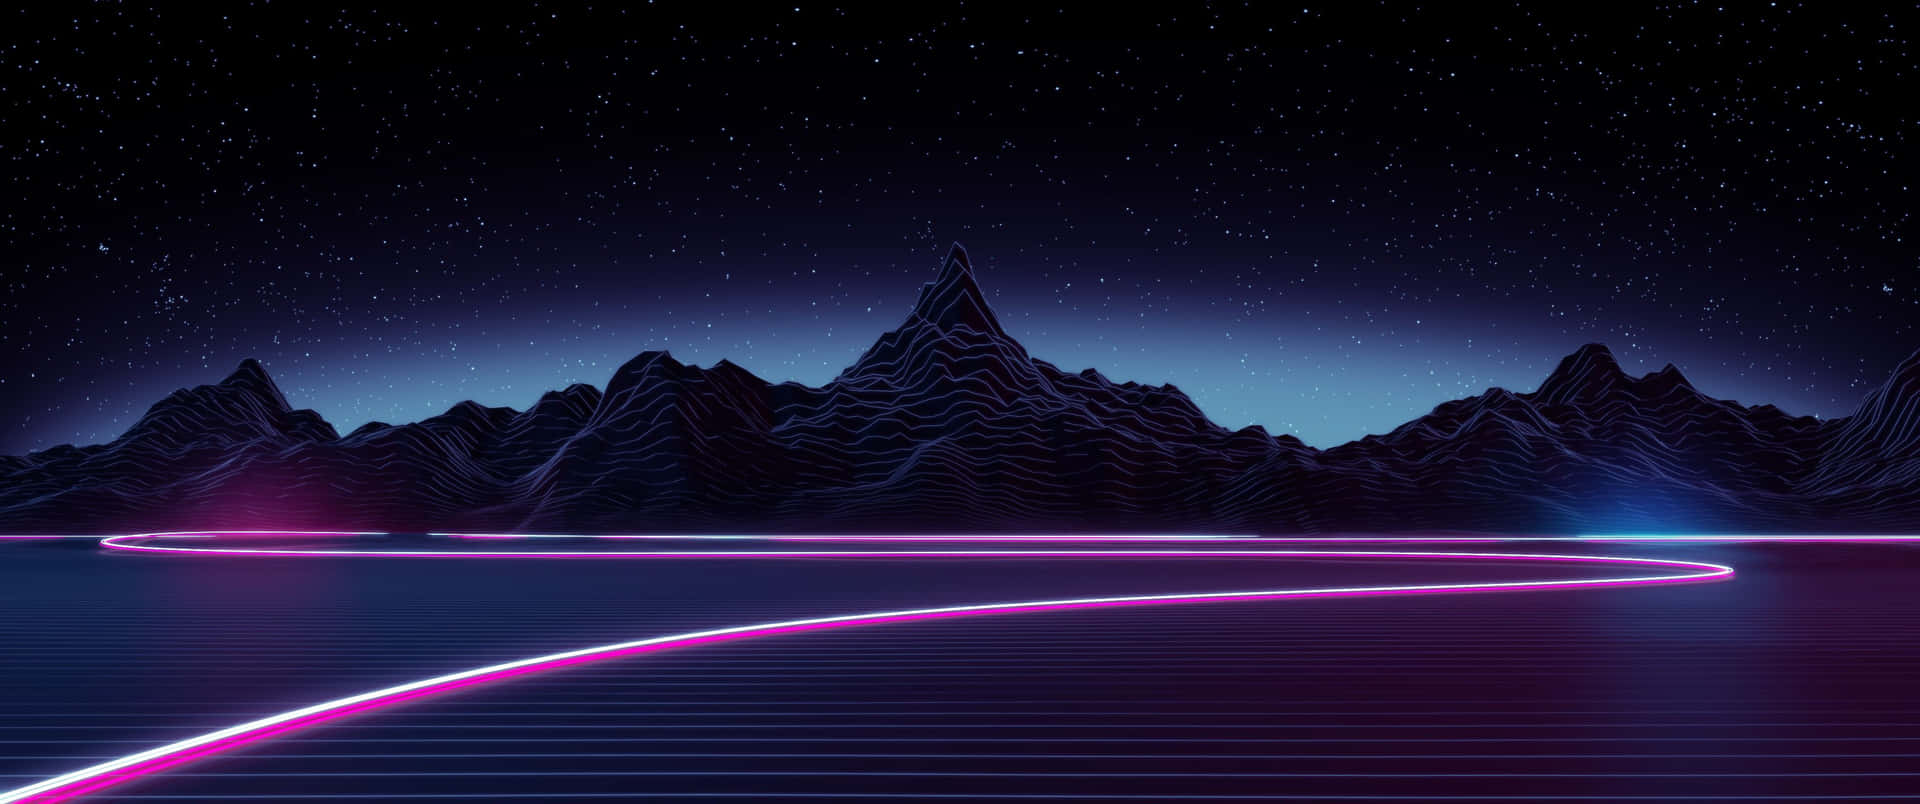 3440x1440p Vaporwave Neon Mountain Background